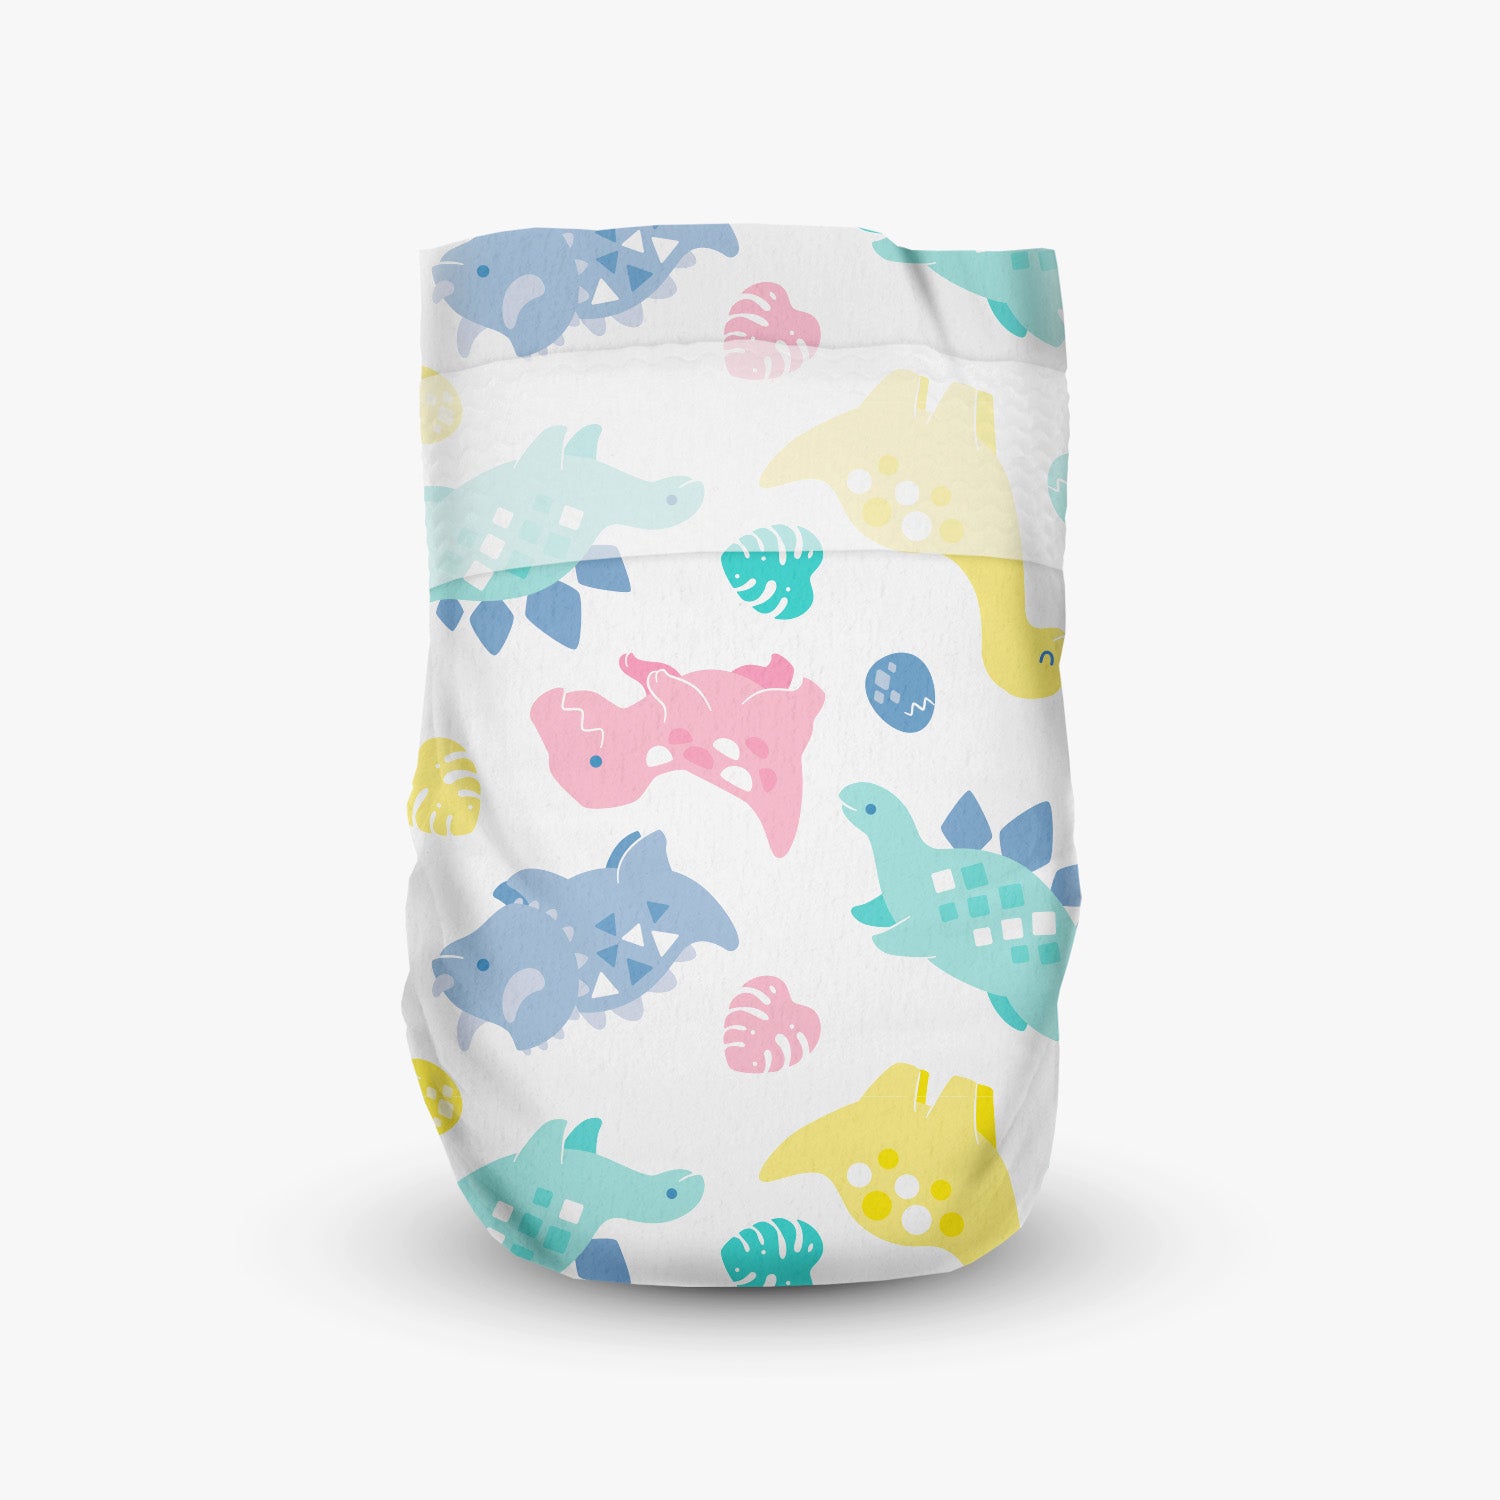 Offspring Fashion Newborn Diapers (1 carton - 4 packets) - Random Designs